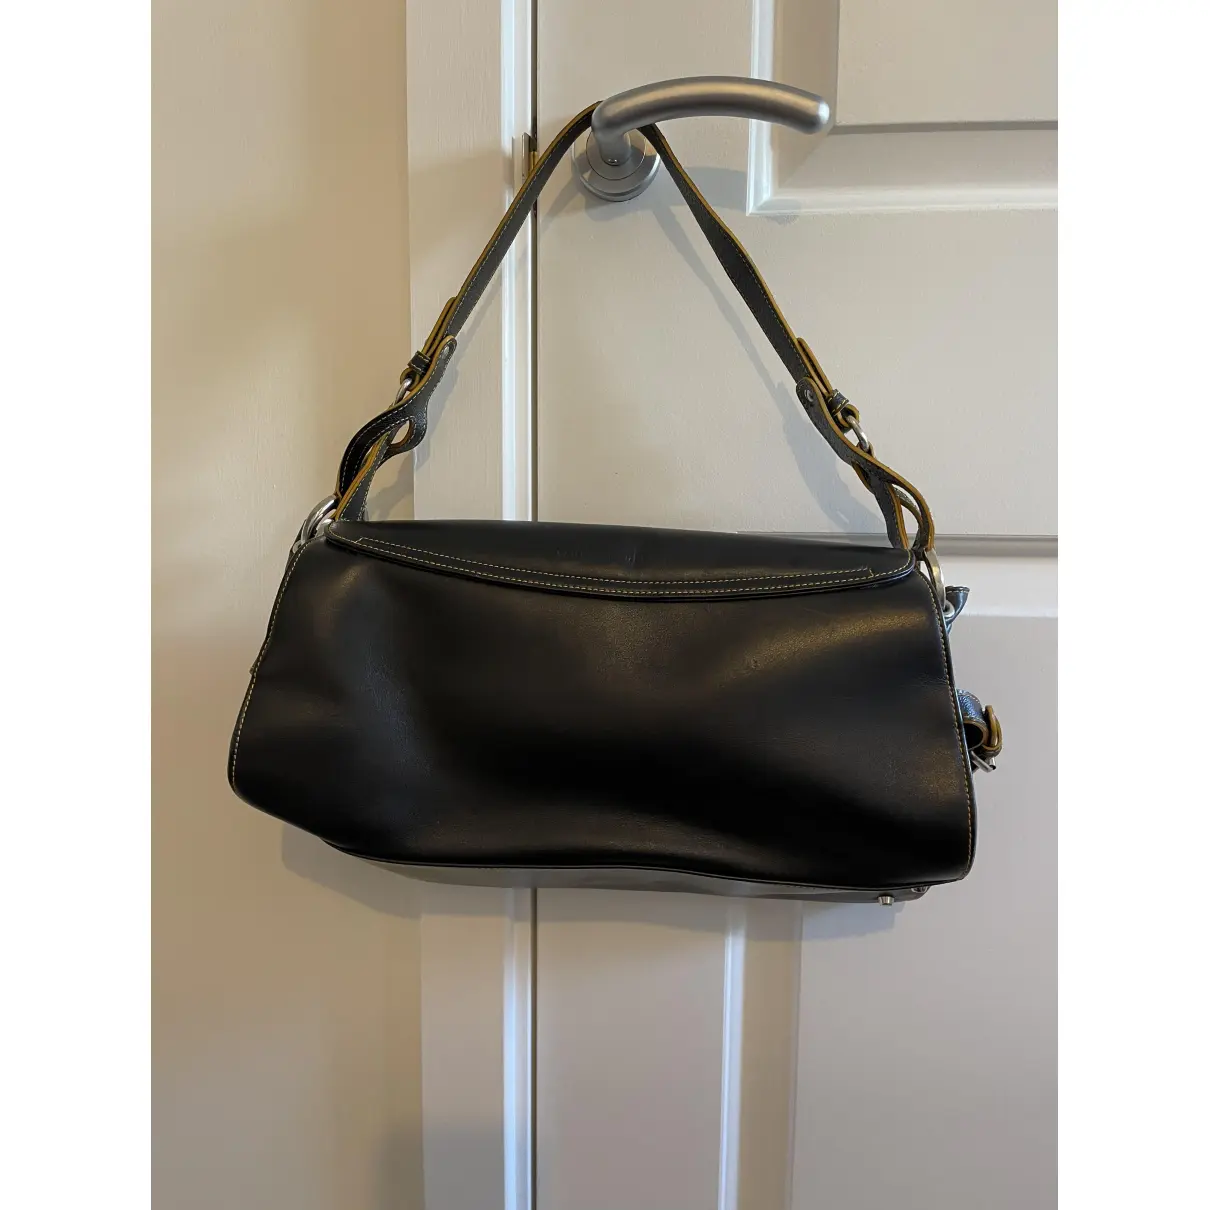 Buy Tanner Krolle Leather handbag online